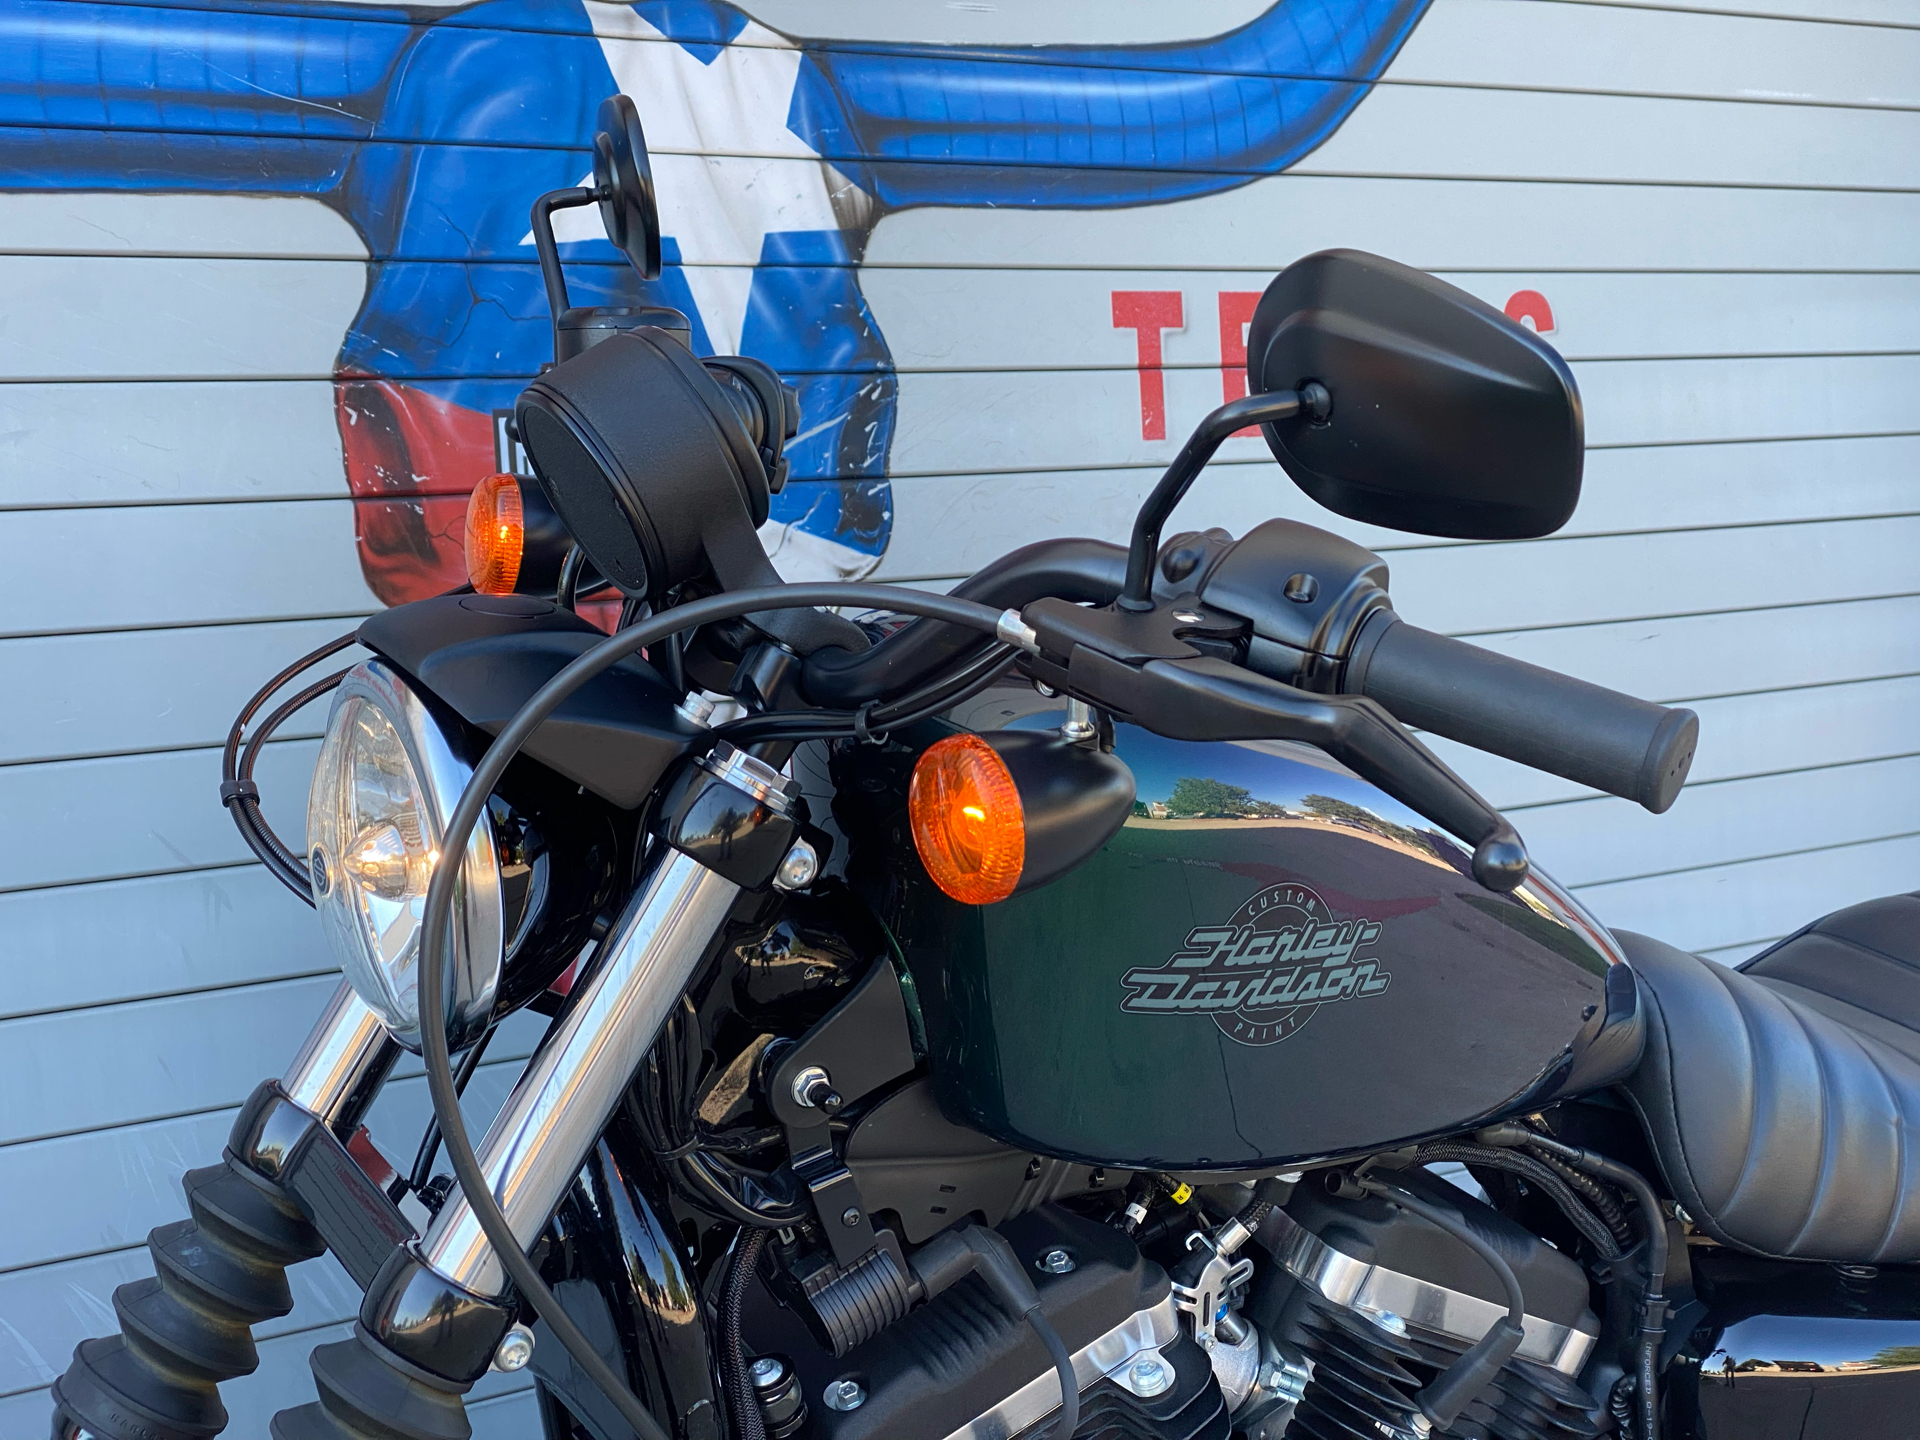 2021 Harley-Davidson Iron 883™ in Grand Prairie, Texas - Photo 13